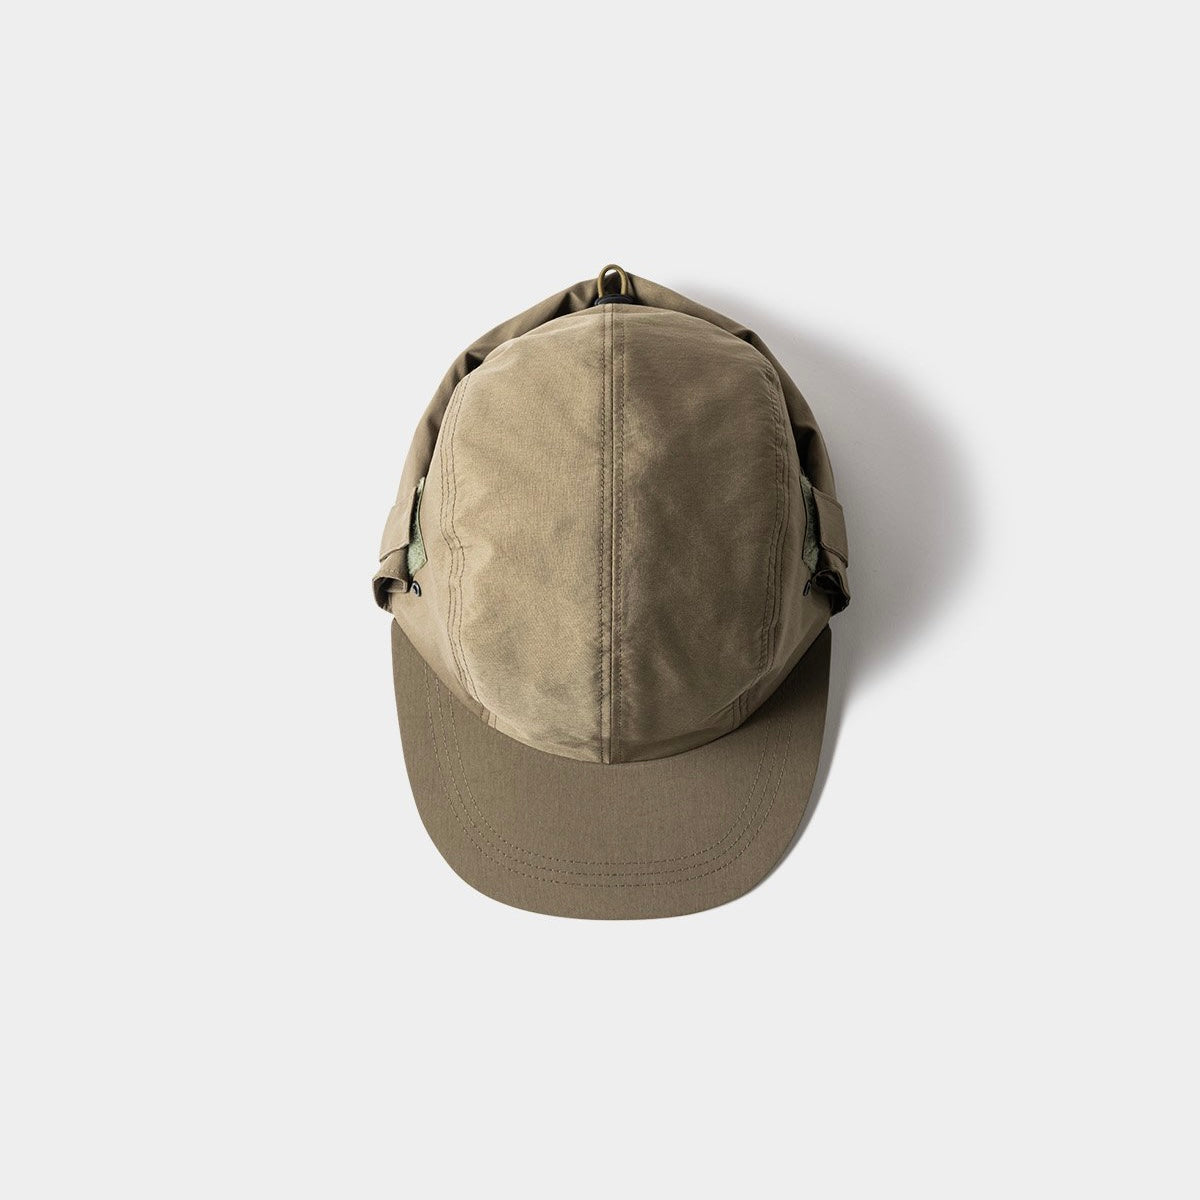 TIGHTBOOTH SUNSHADE CAMP CAP